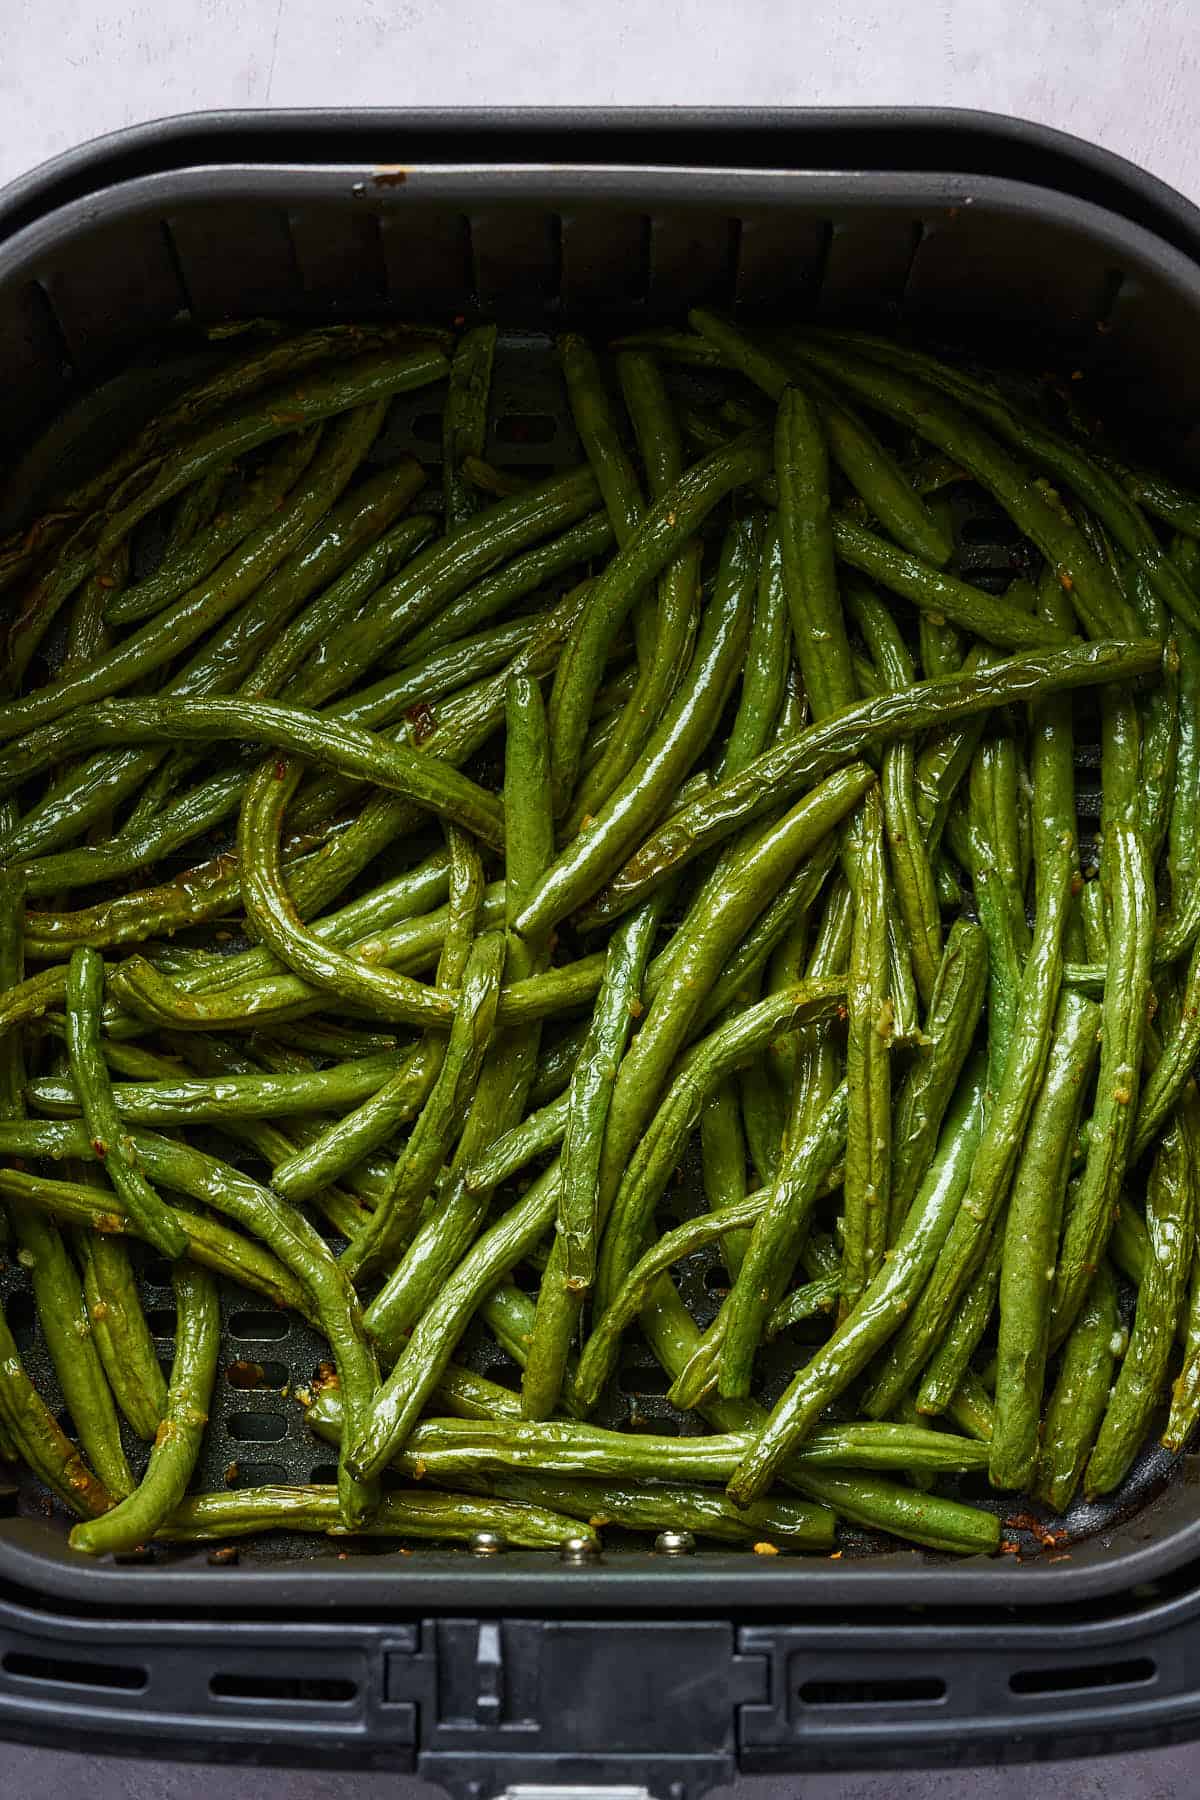 Air fryer garlic green beans in the air fryer basket.